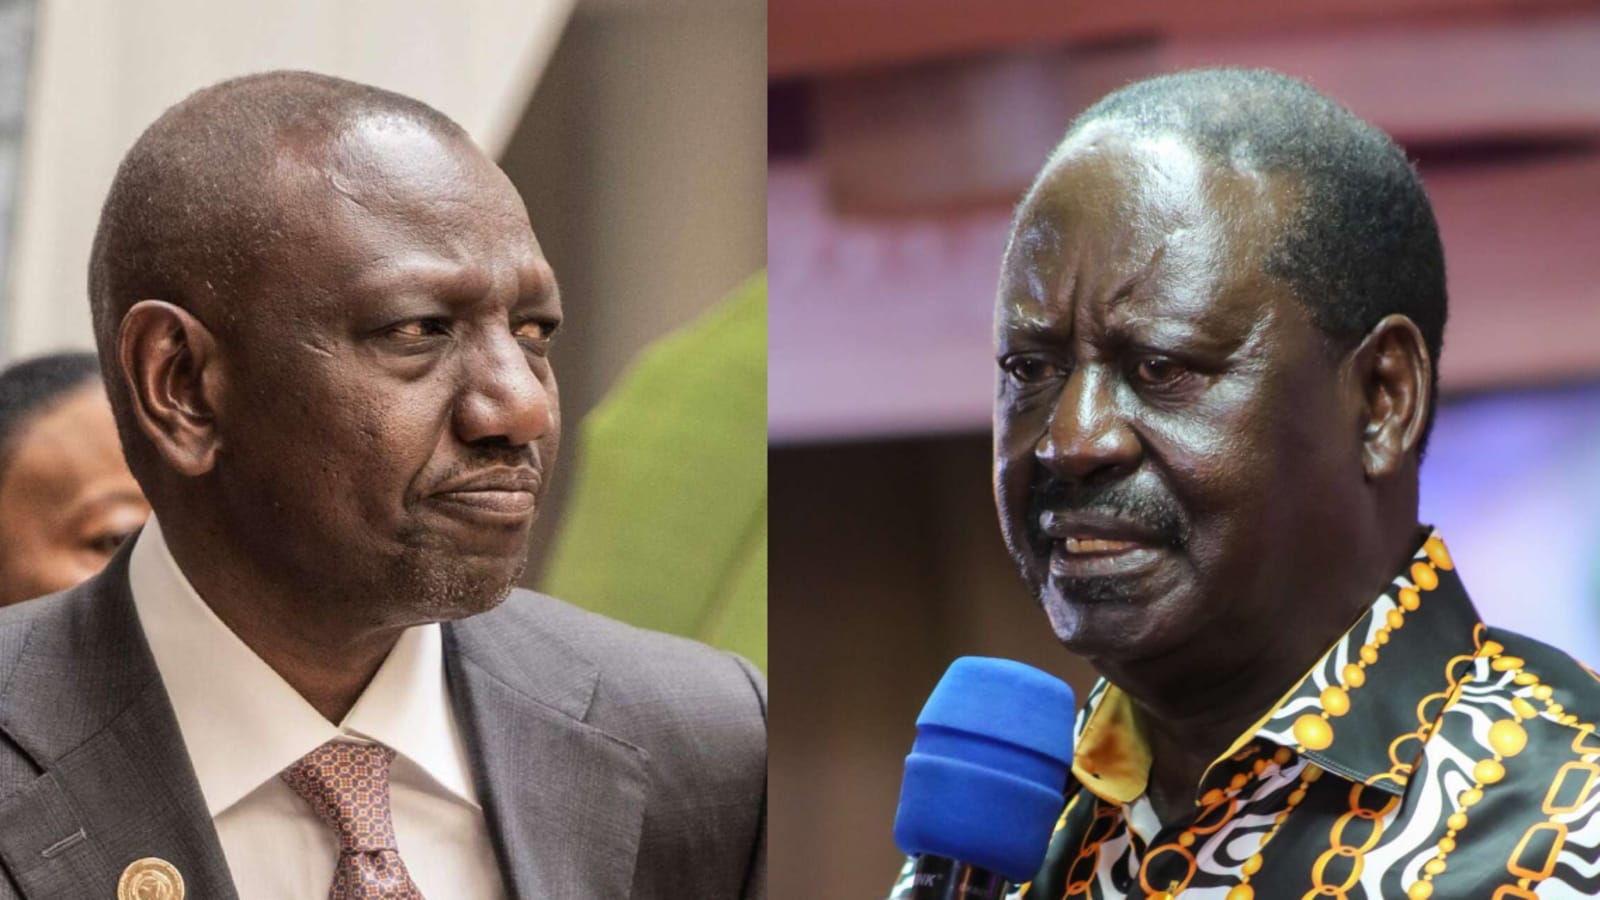 Photocollage of President Ruto and Raila Odinga